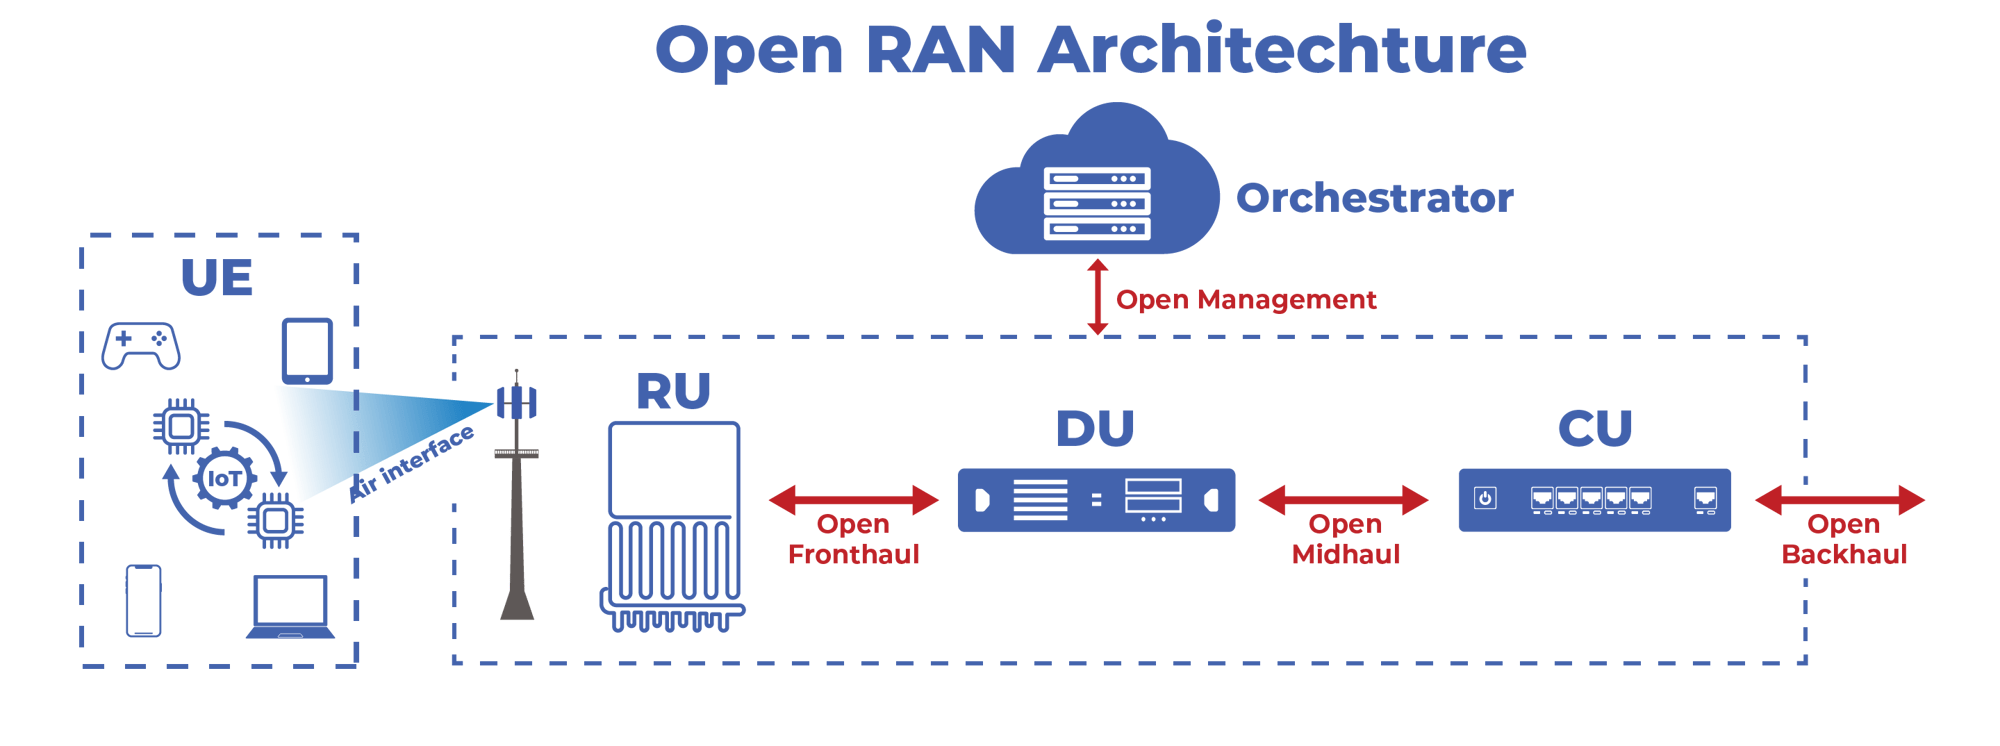 OpenRAN-Archtechture_4-1